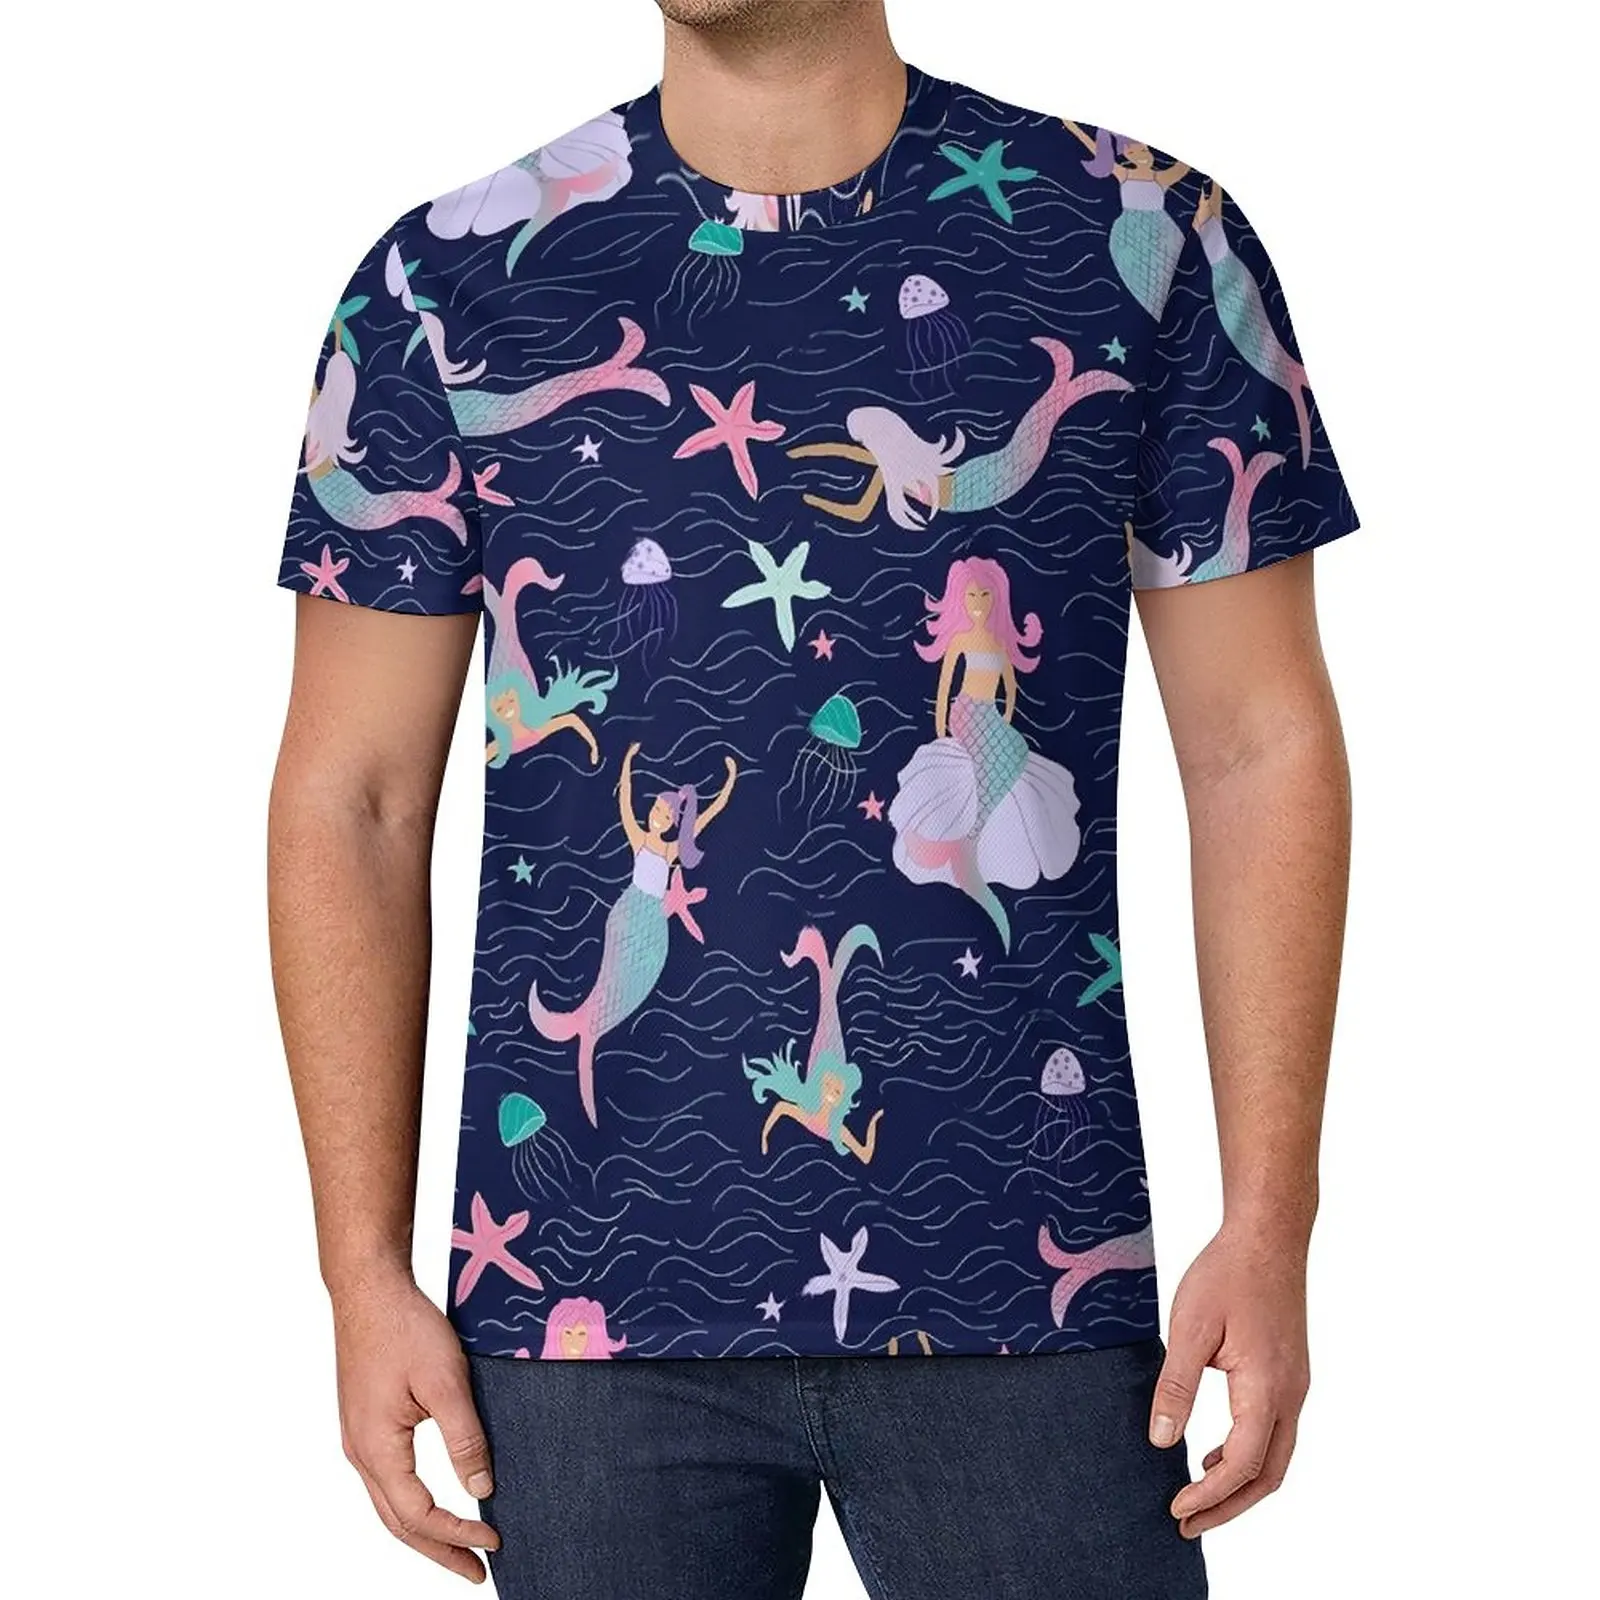 

Mermaids Swimming T Shirt Starfish Print Streetwear T-Shirts Novelty Tee Shirt Man Graphic Clothes Big Size 5XL 6XL